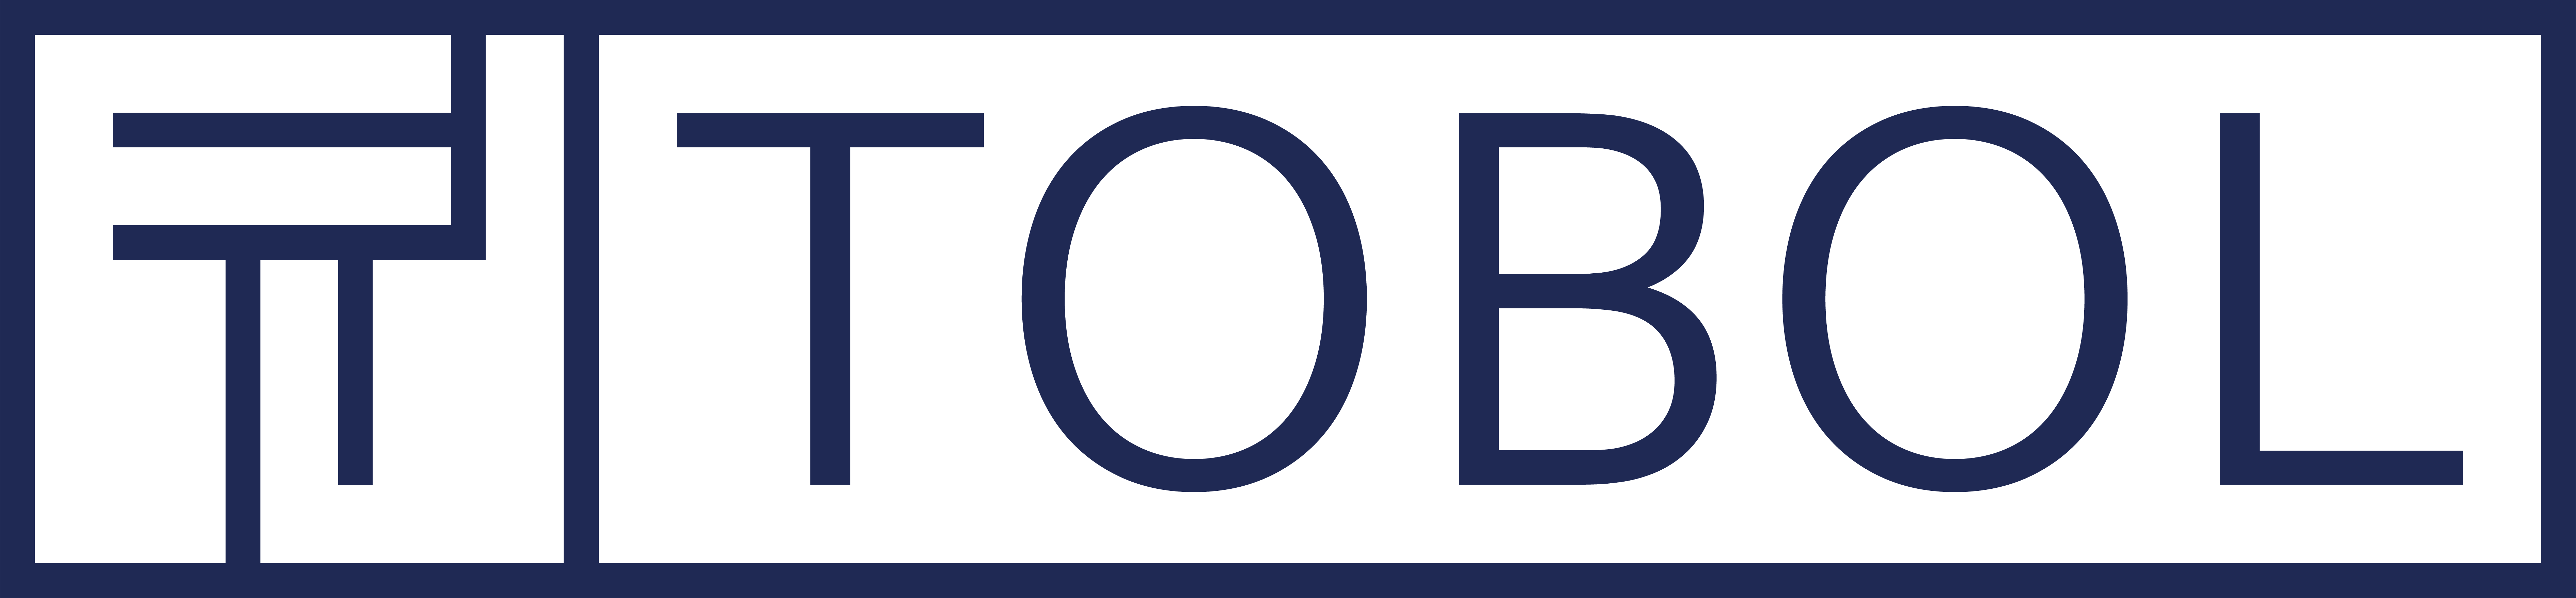 TOBOL Logo